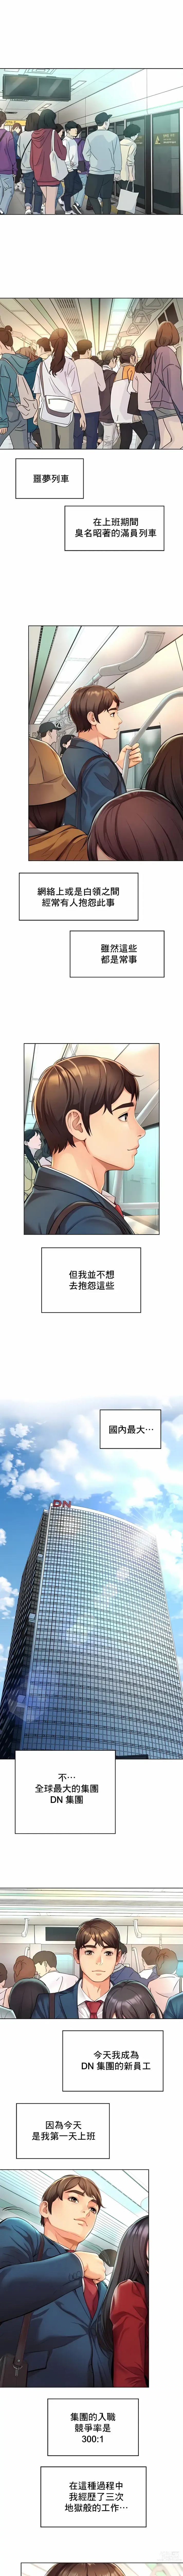 Page 4 of manga 职场爱恋